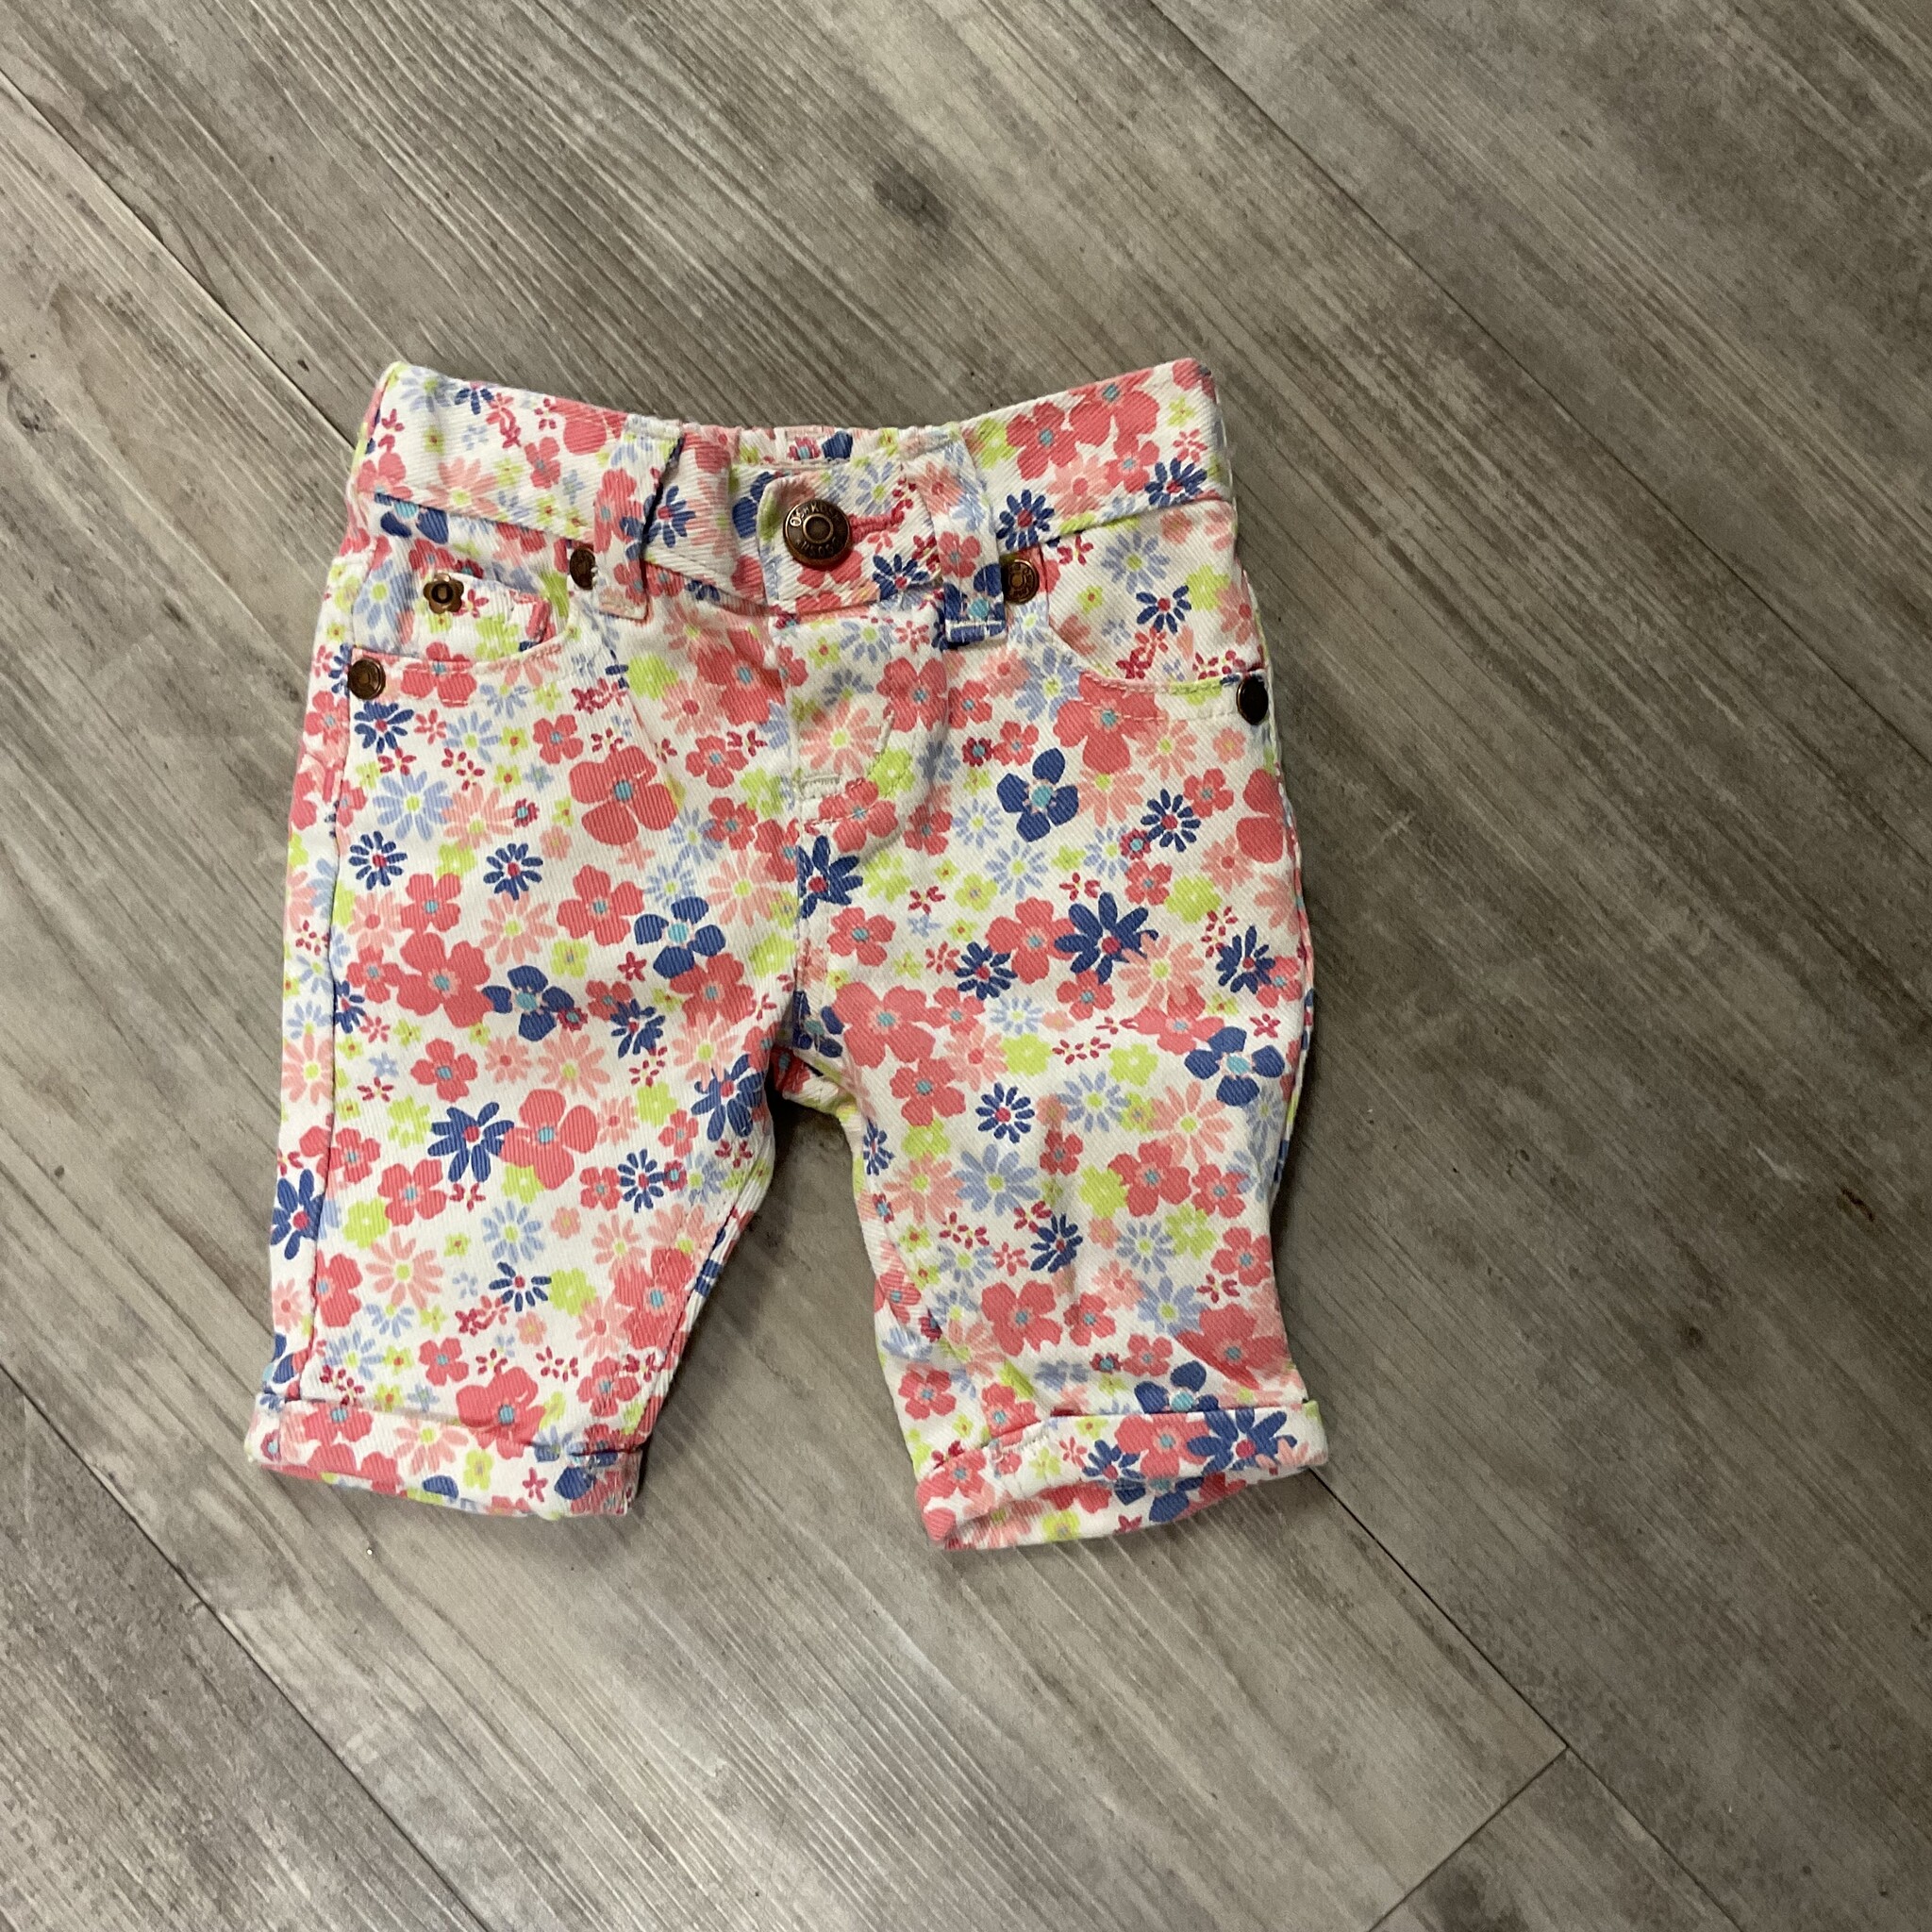 Floral Jean Shorts - Size 3M